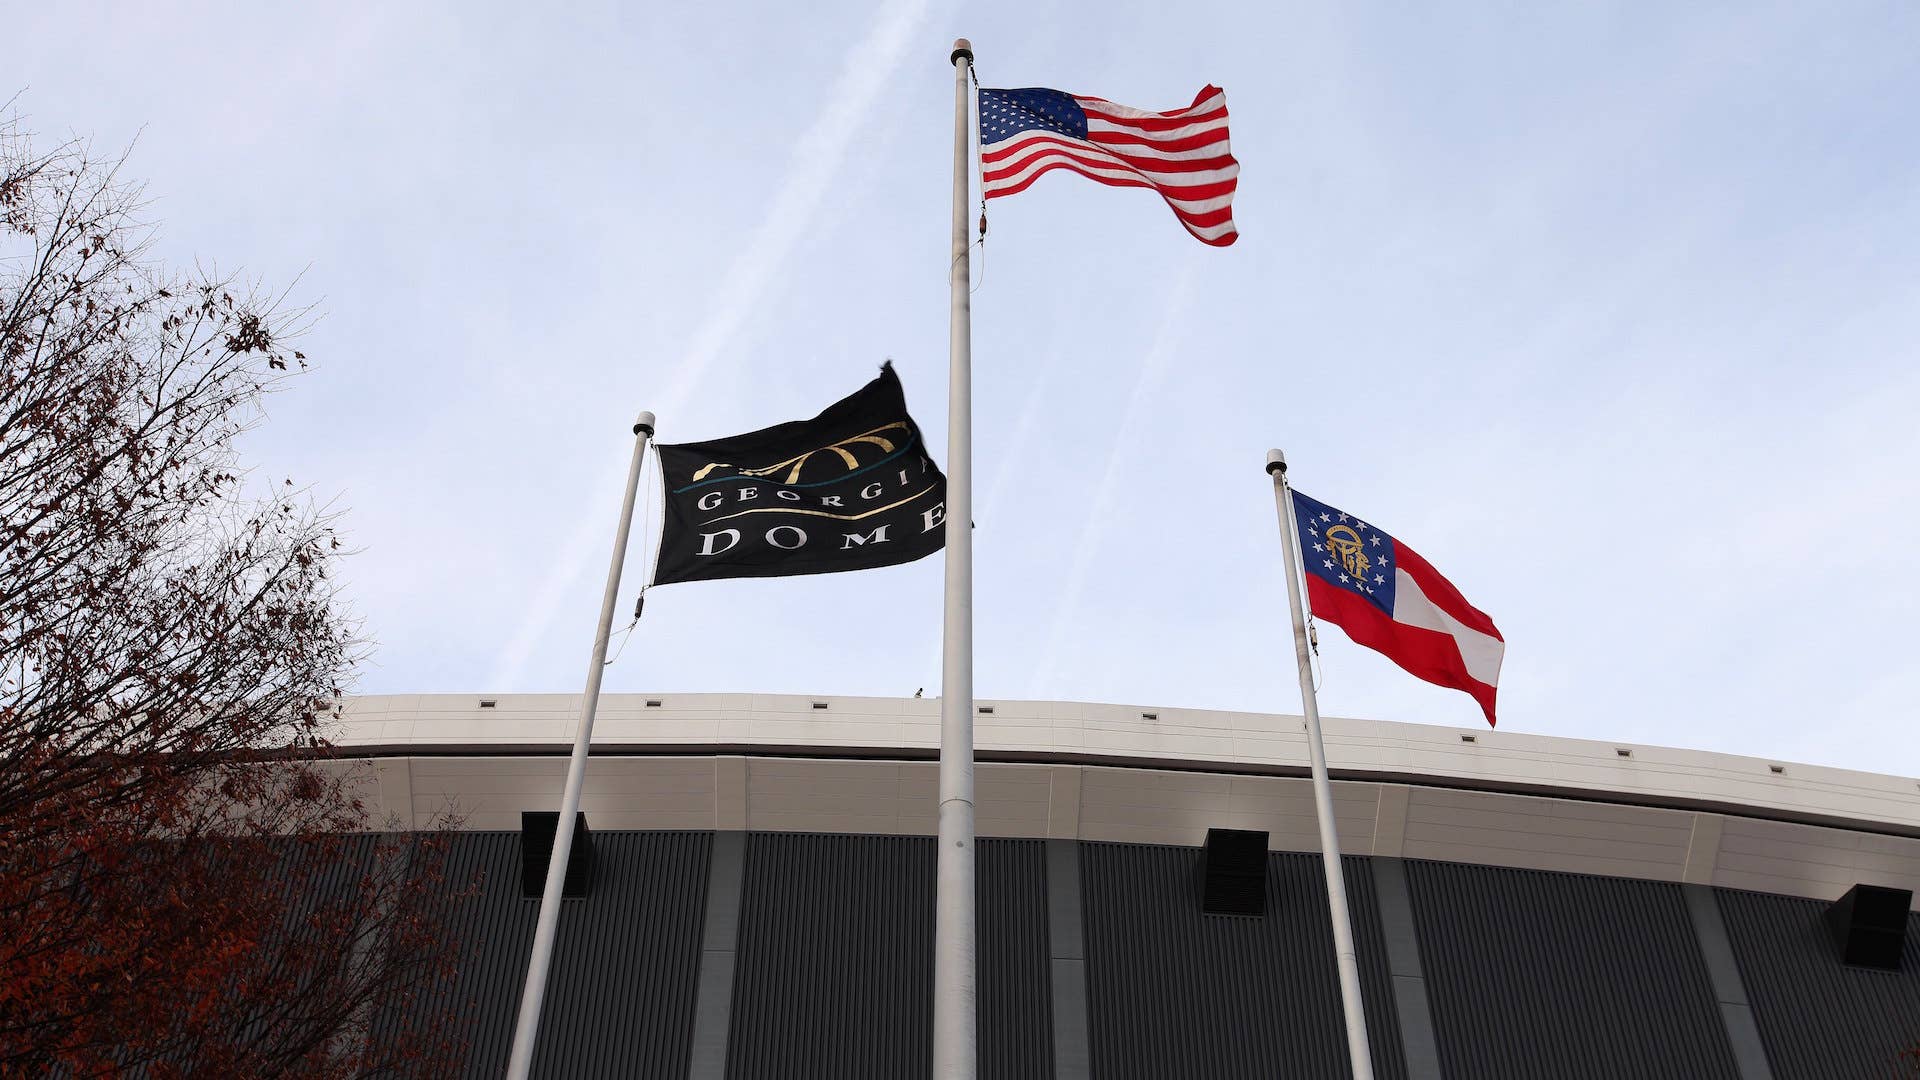 Georgia Dome Flag, American Flag and the Georgia State Flag